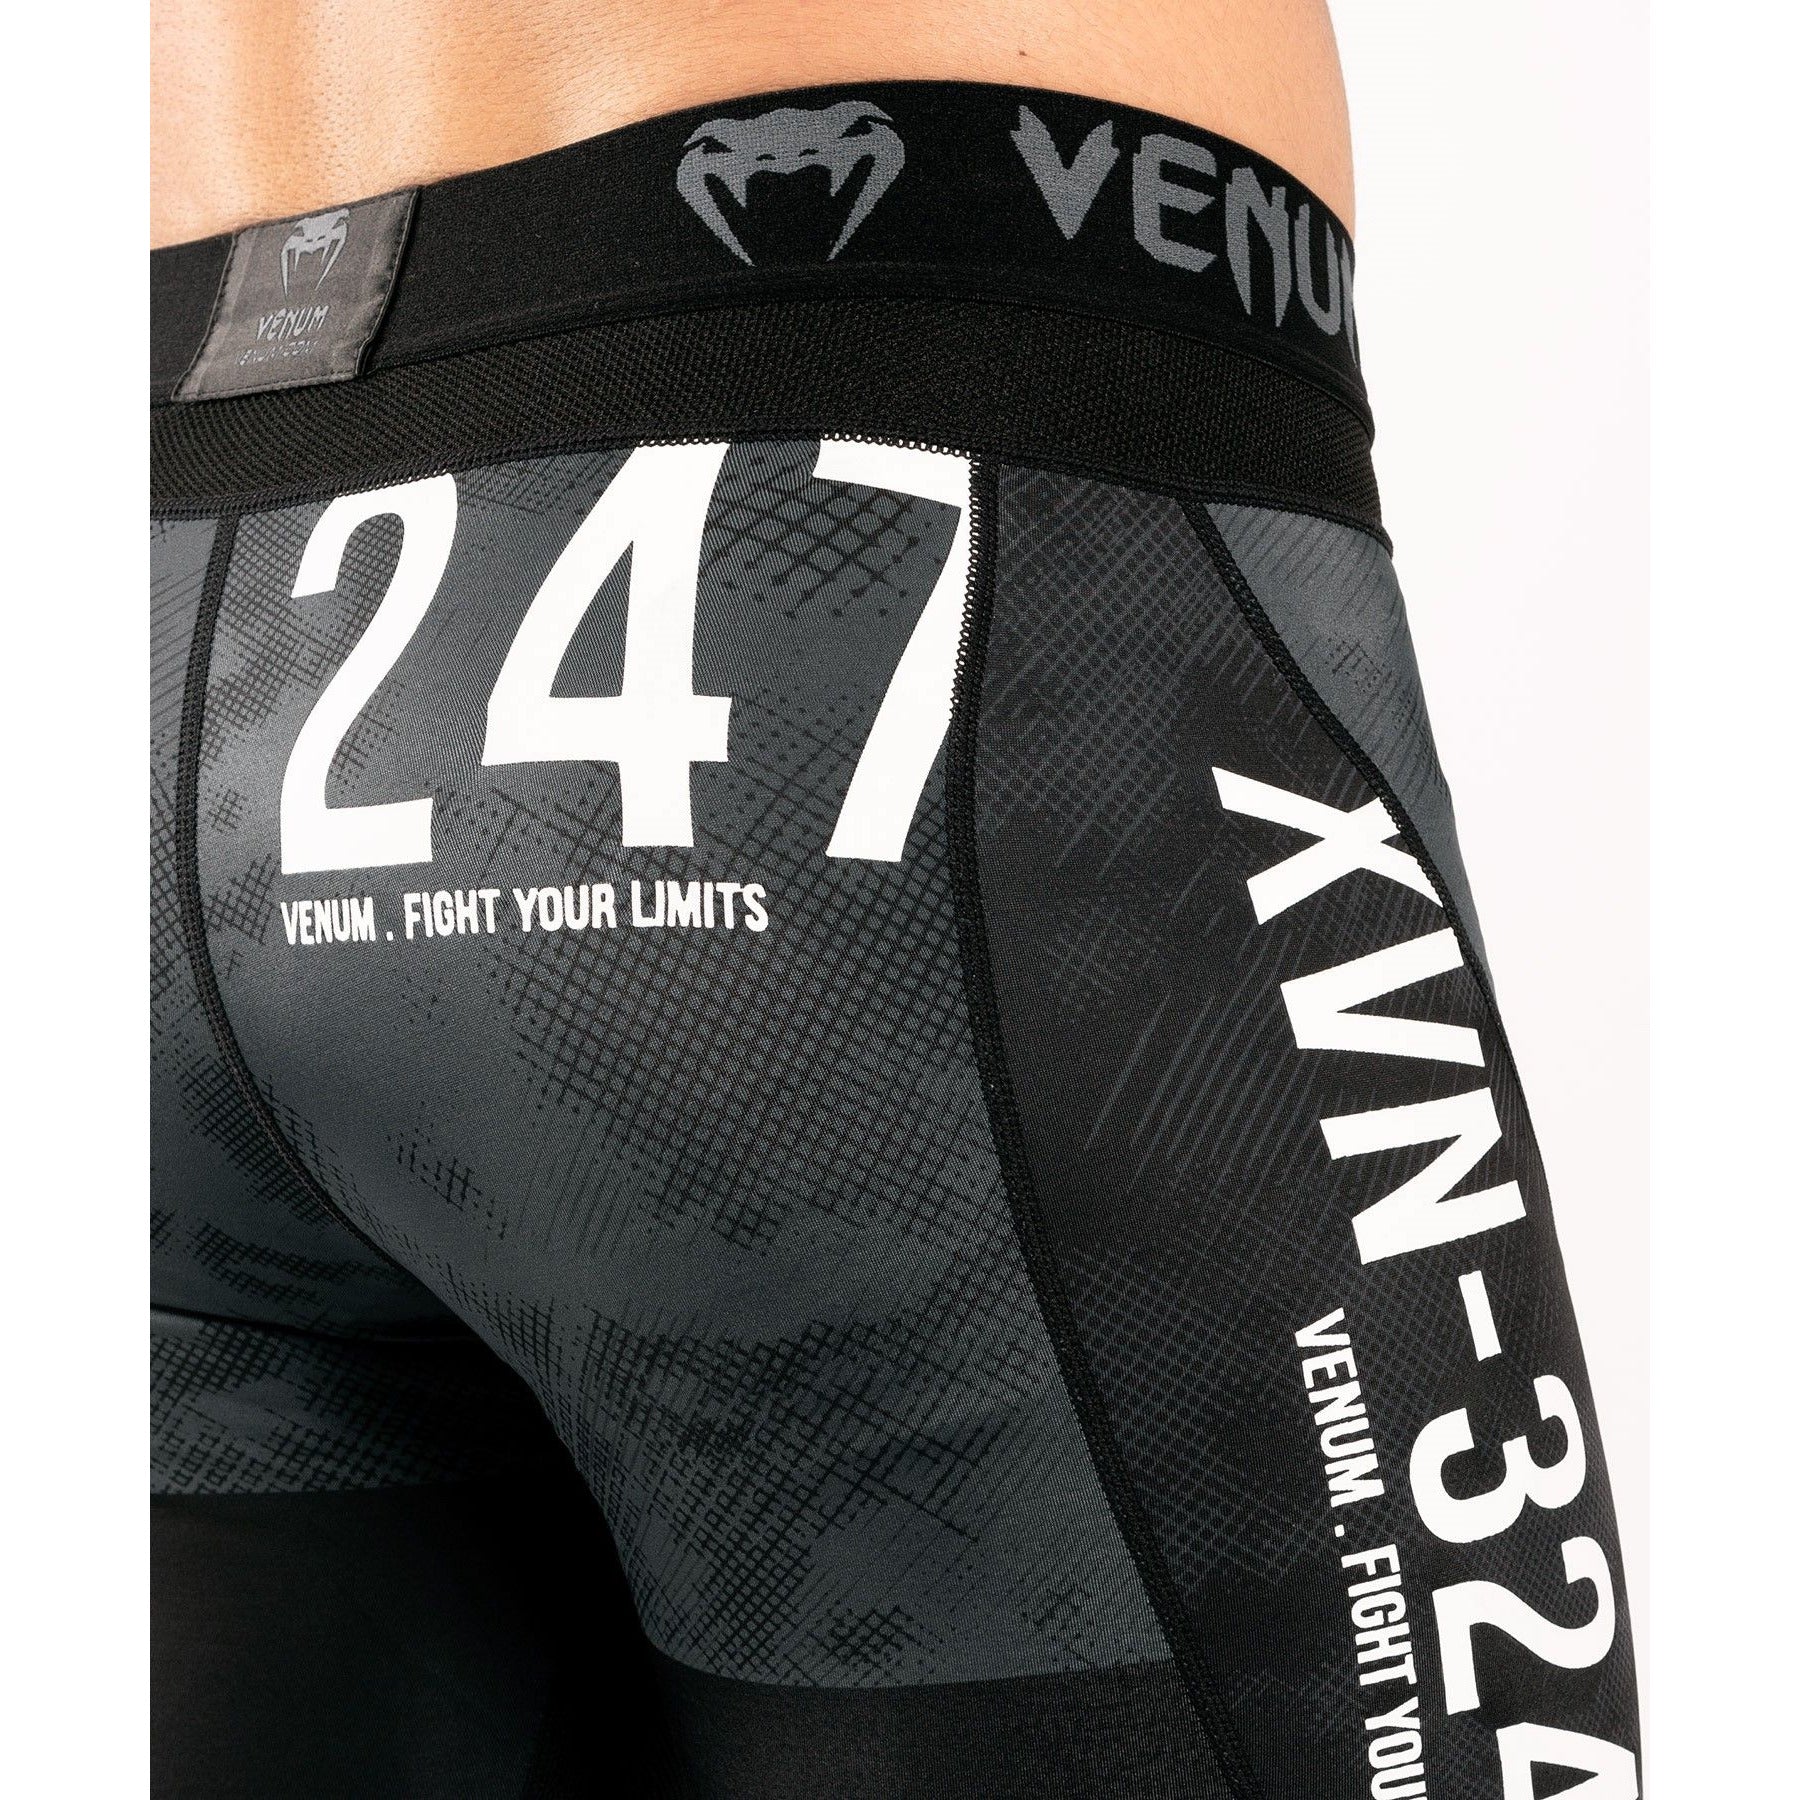 SKY247 Venum Compression Shorts